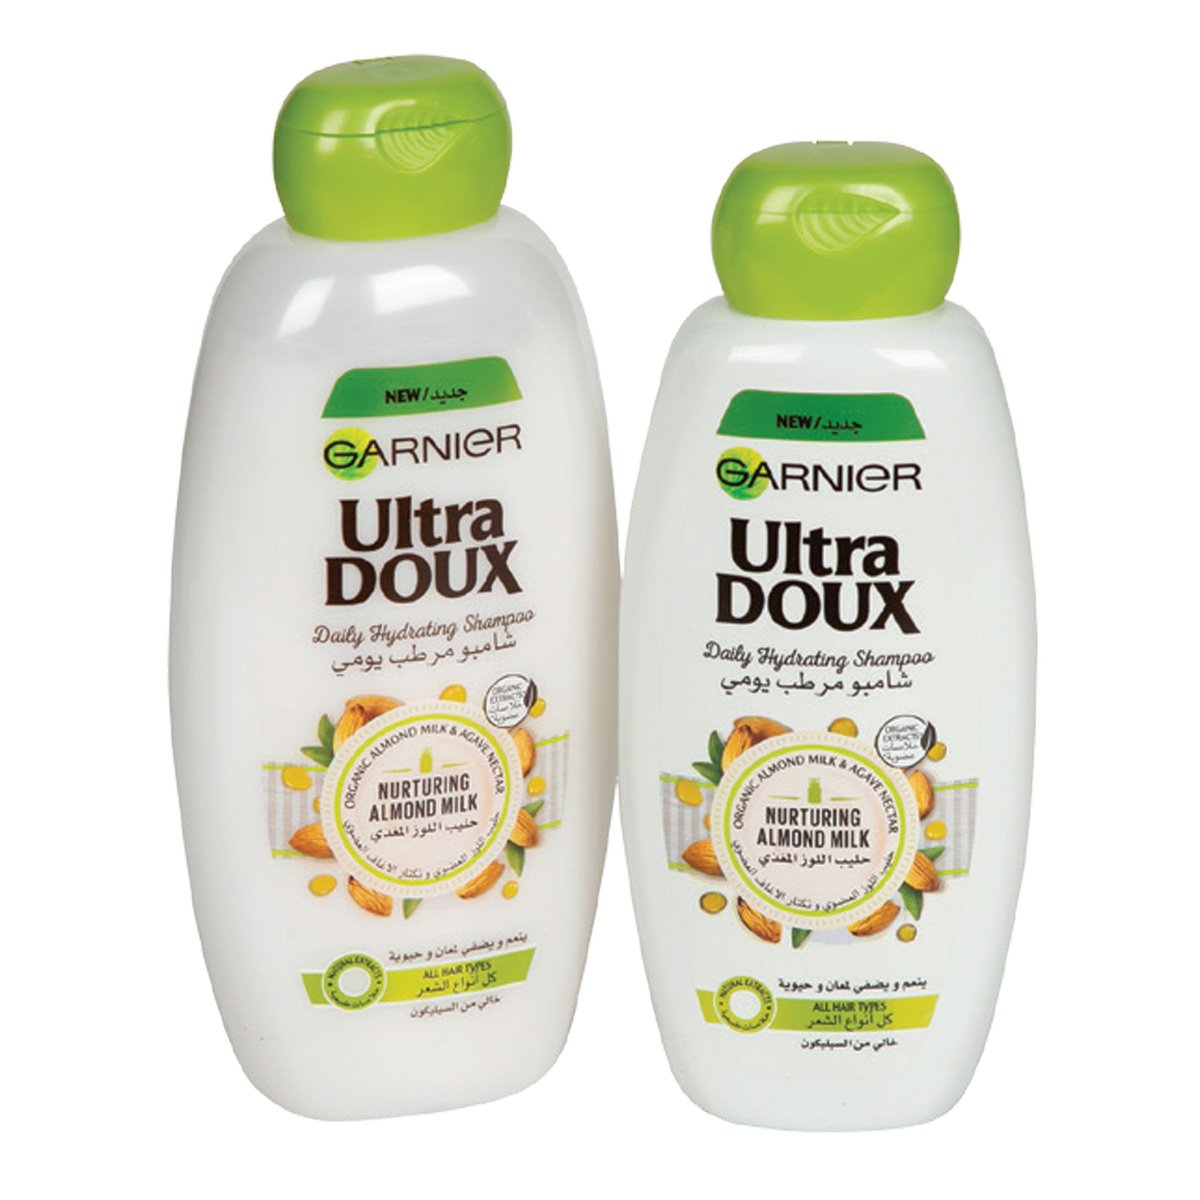 Garnier Ultra Doux Daily Hydrating Shampoo Nurturing Almond Milk 600 ml + 400 ml